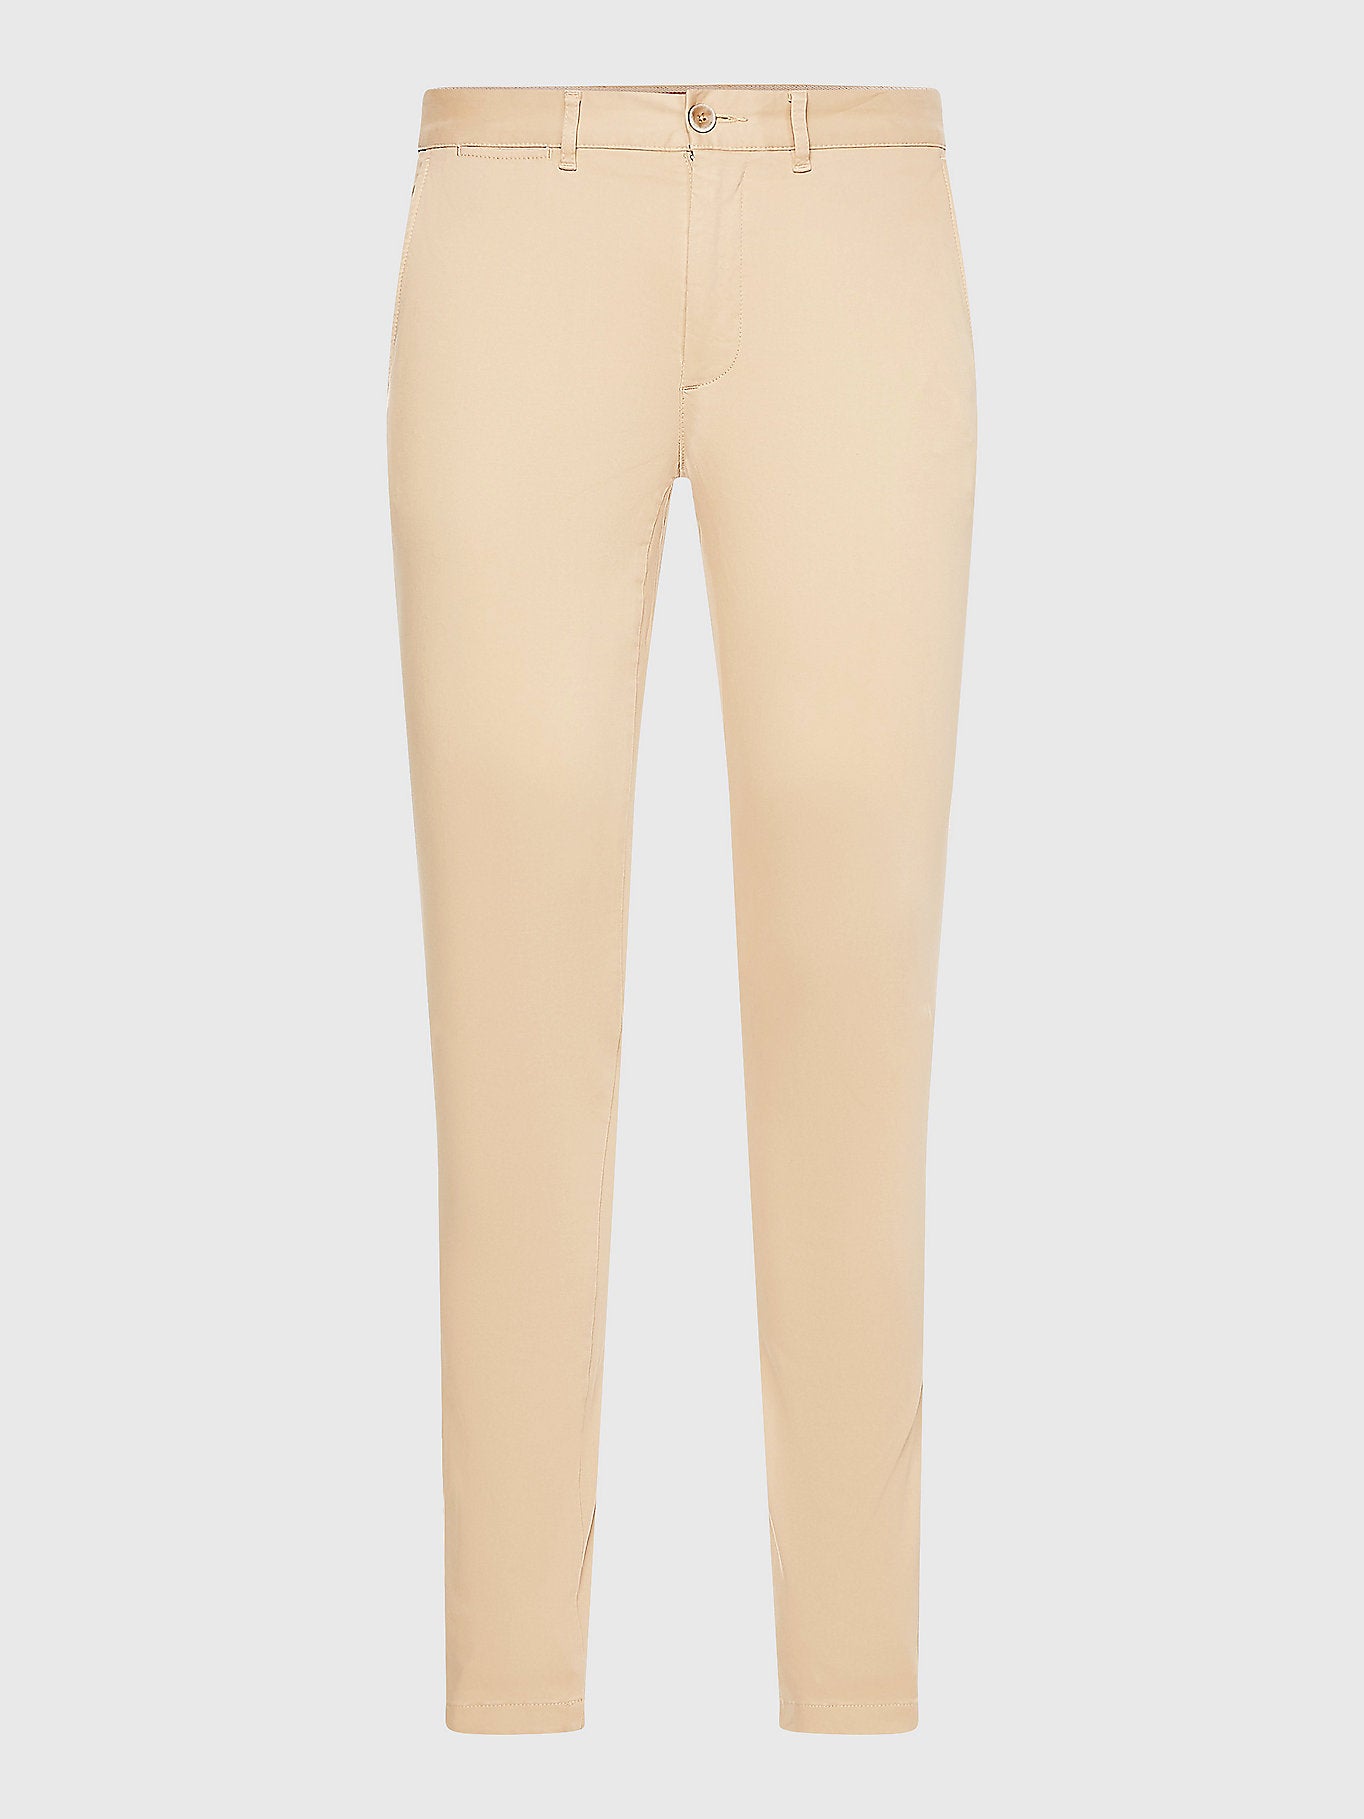 Pantalon chino slim homme Tommy Hilfiger beige coton stretch | Georgespaul